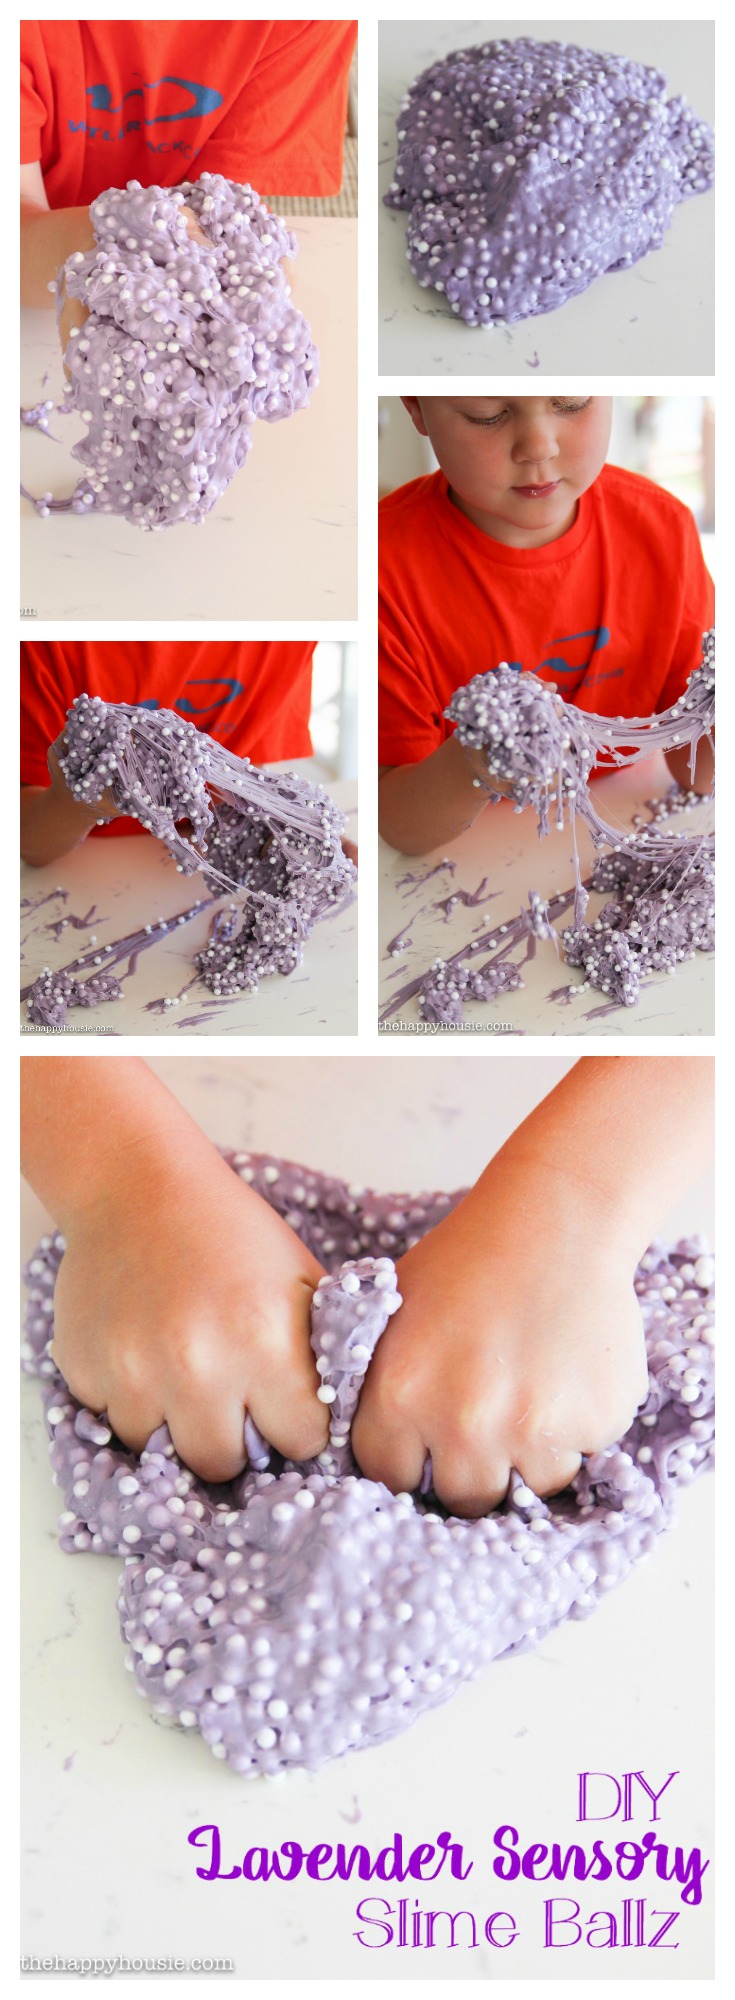 DIY lavender sensory slime ballz poster.